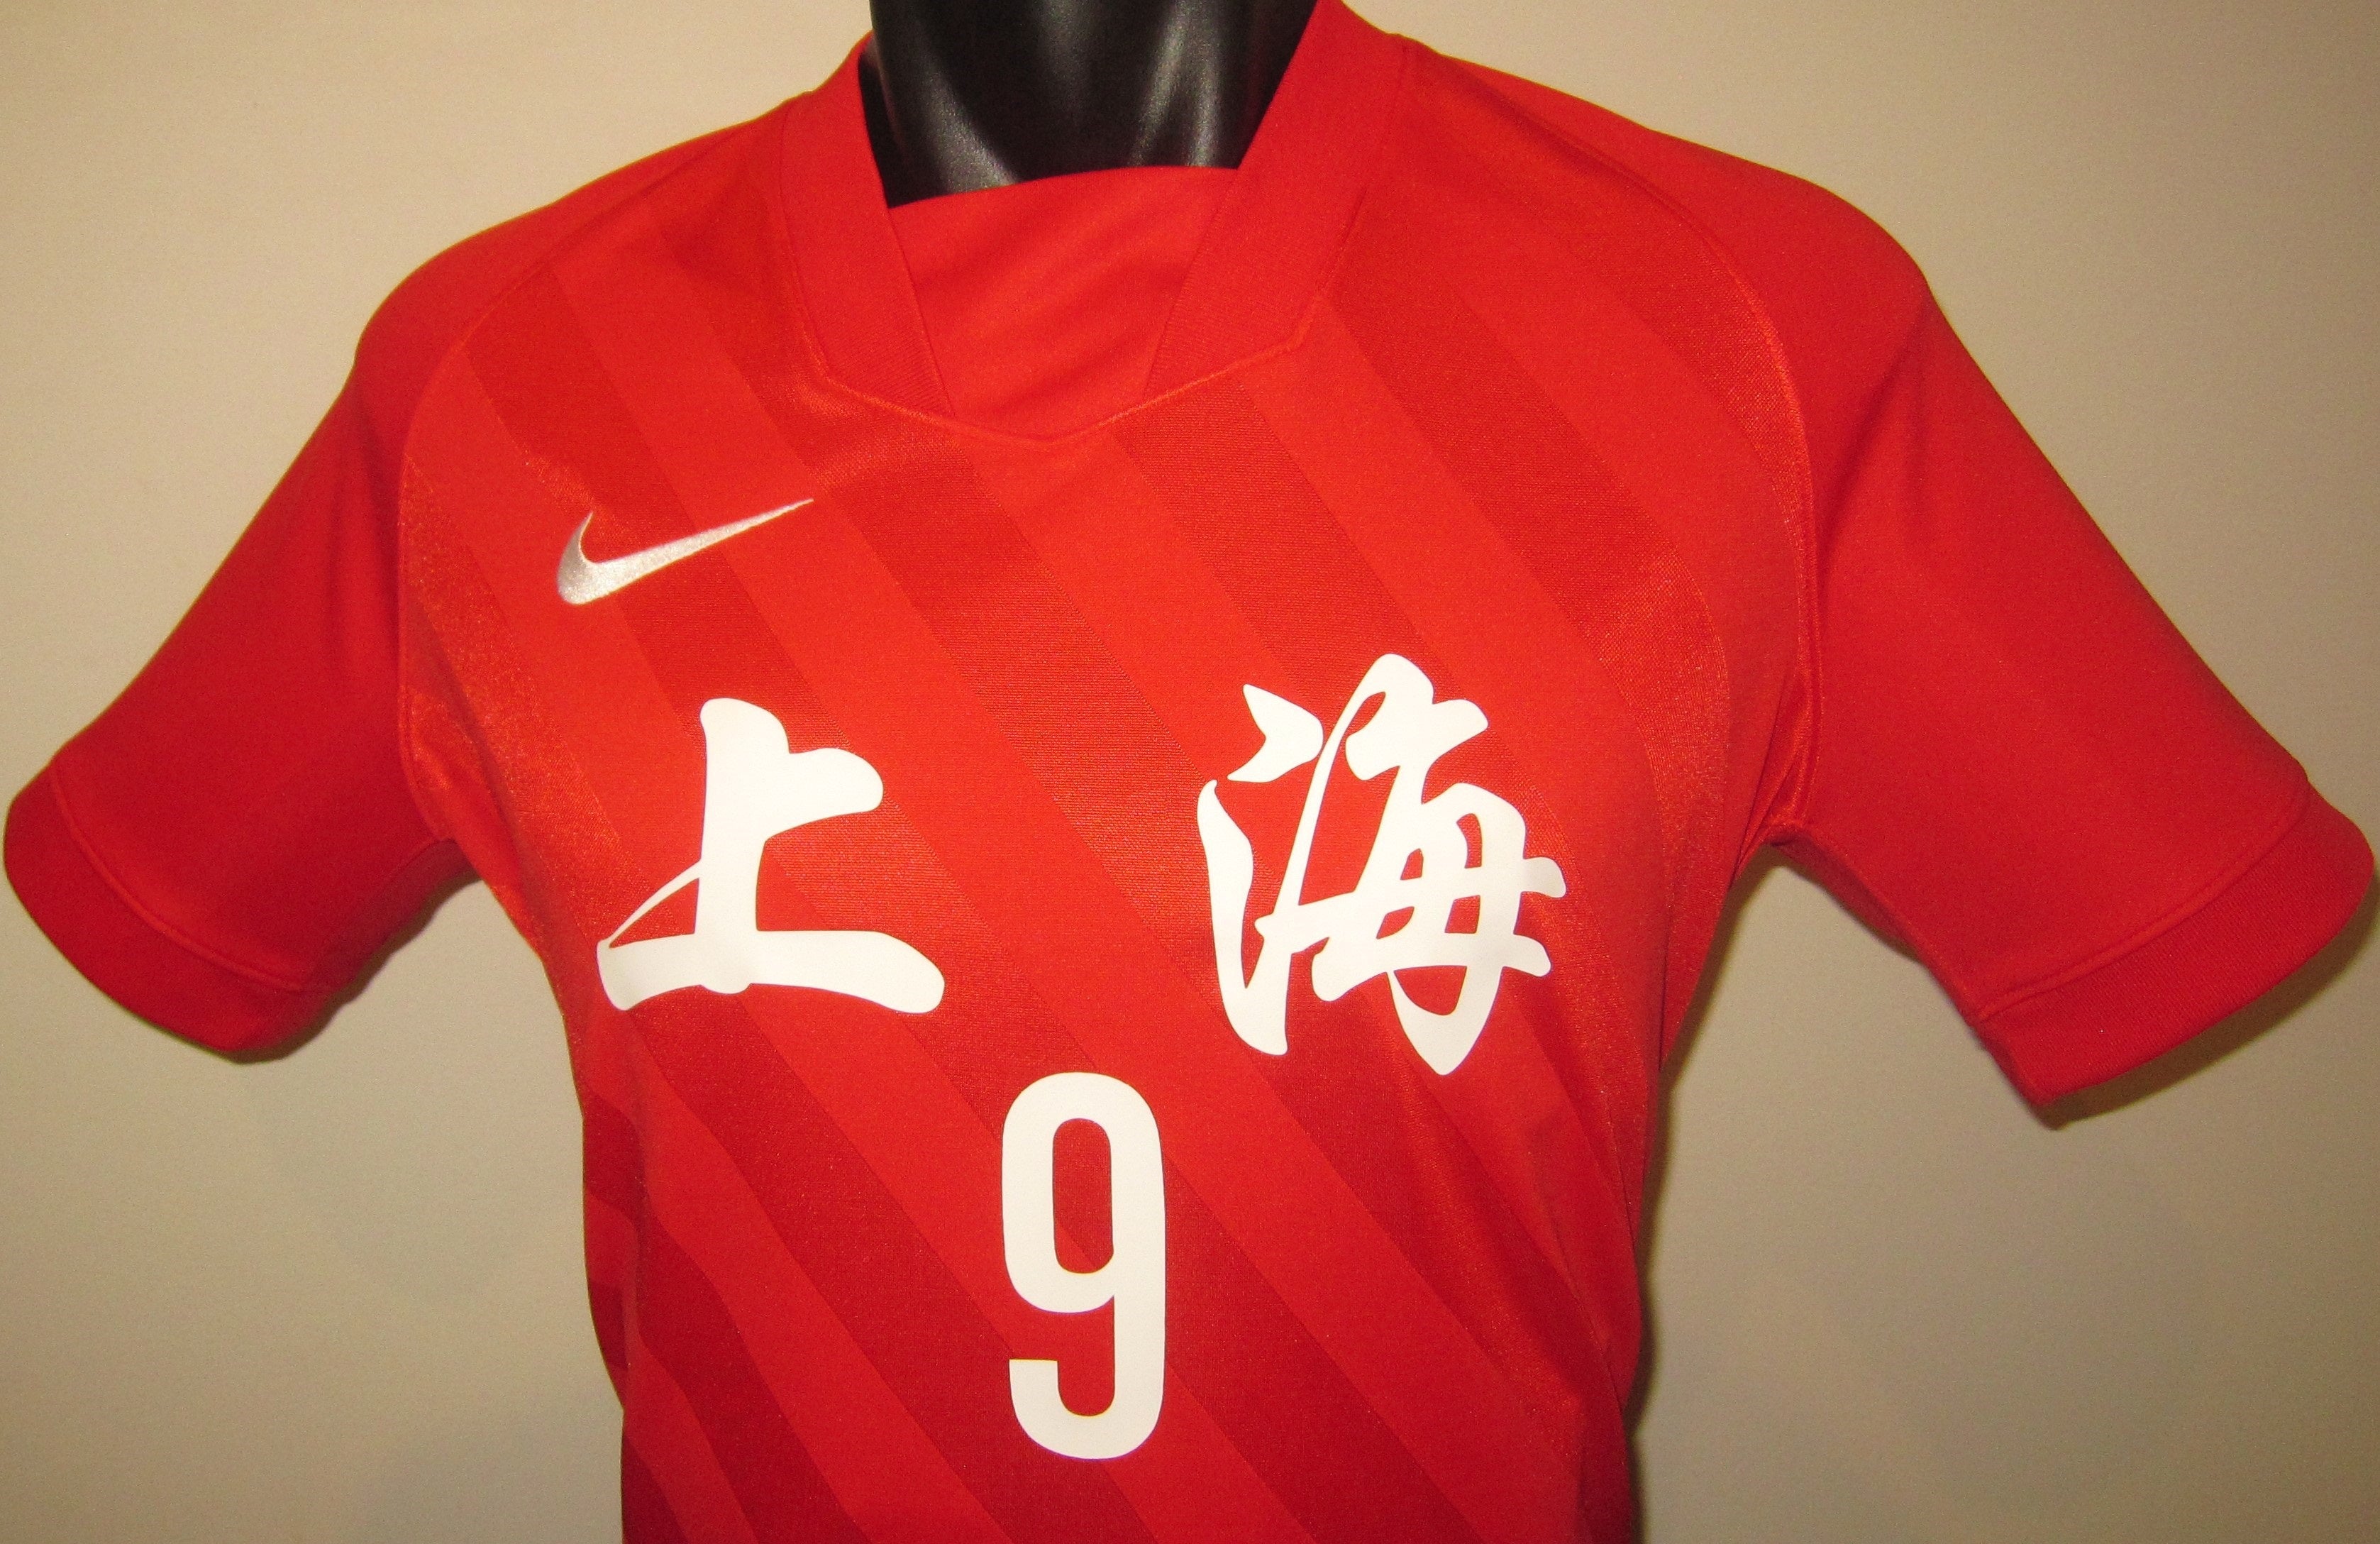 Shanghai 2021 National Games Home (#9) Jersey/Shirt